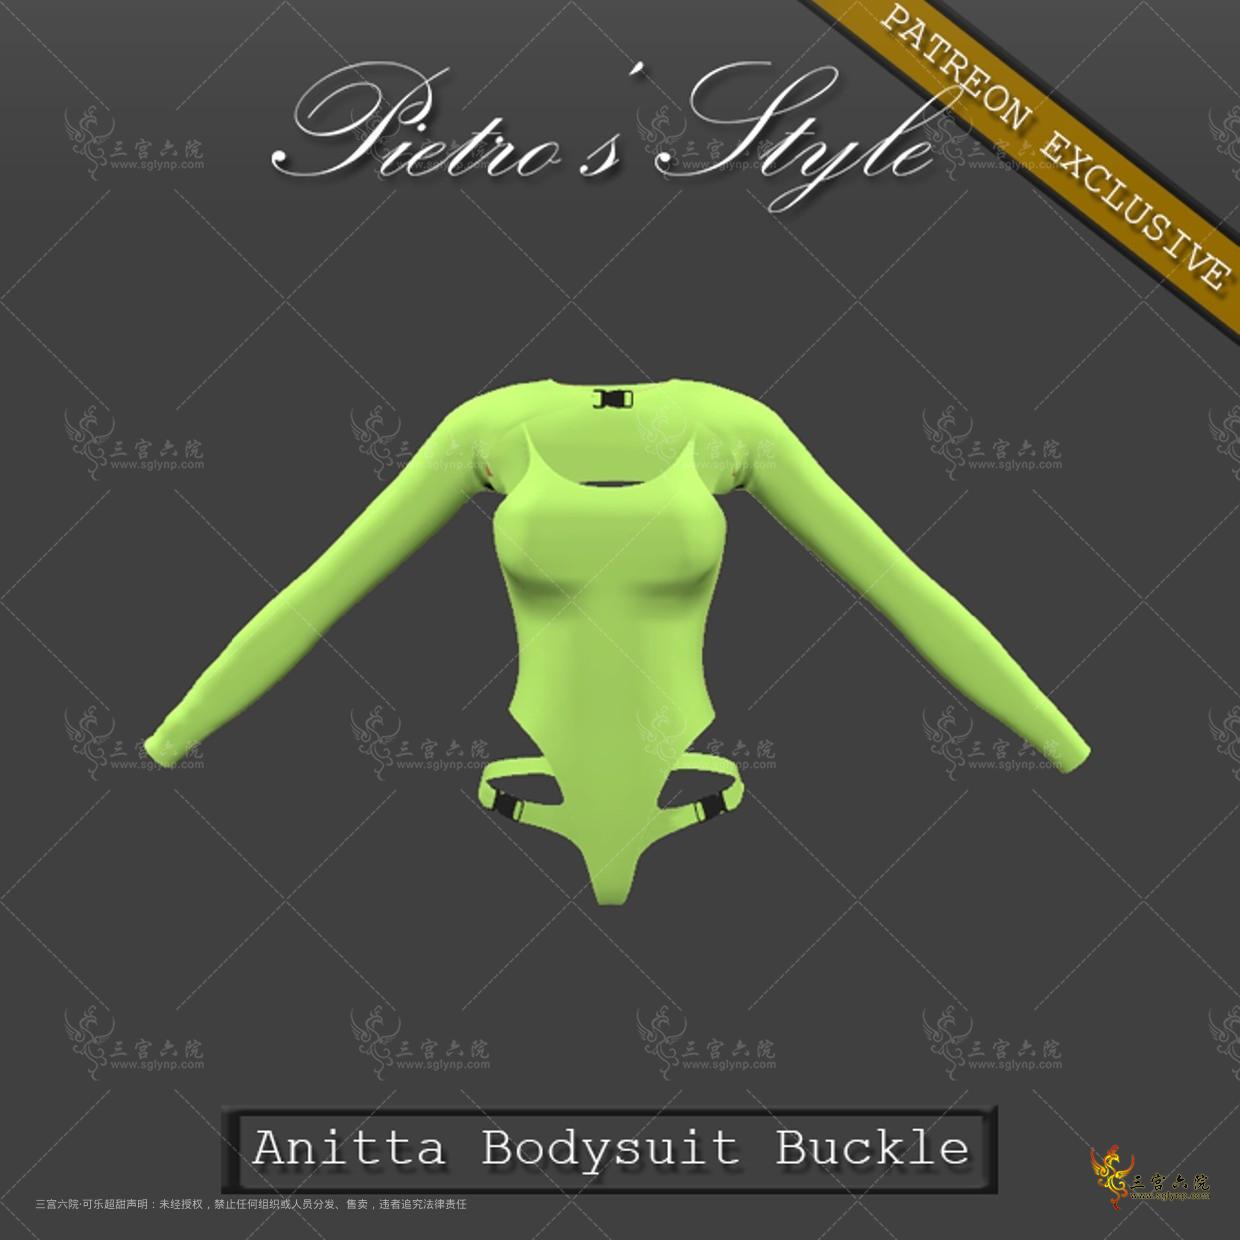 (Pietro's Style) - Anitta Bodysuit Buckle.png